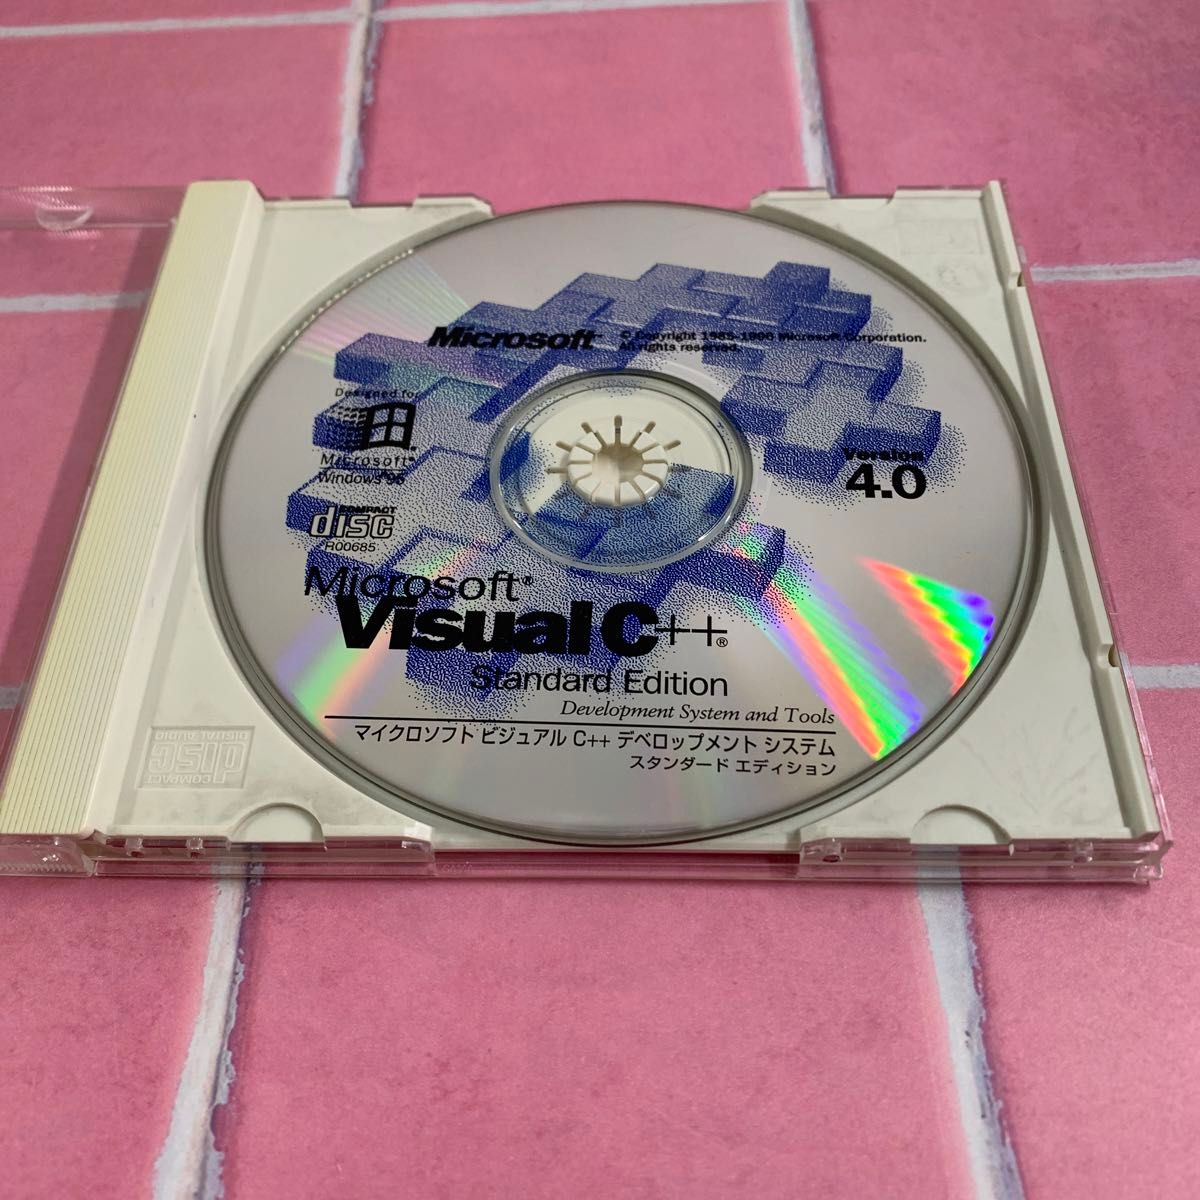 Microsoft Visual C++ 4.0 Standard Edition